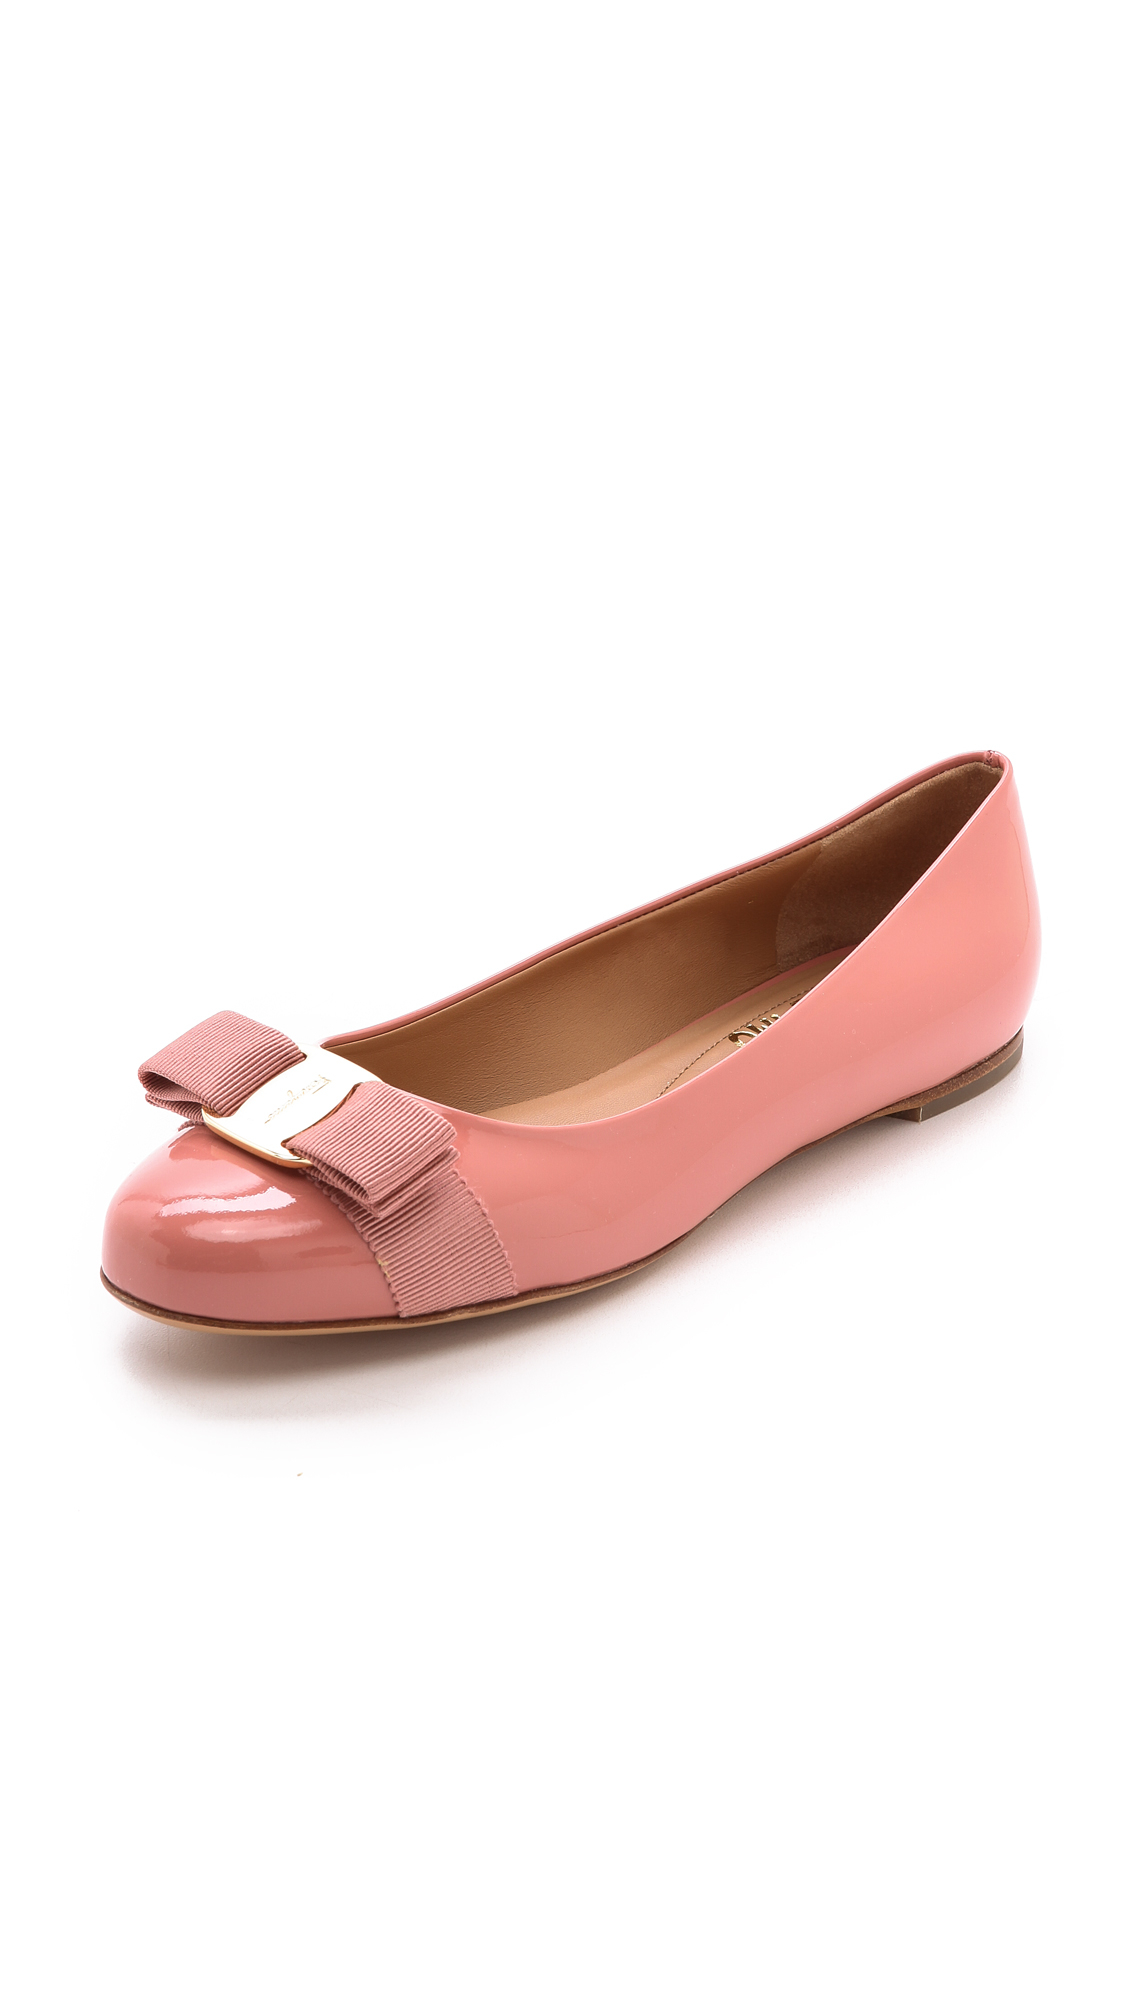 ferragamo shoes pink